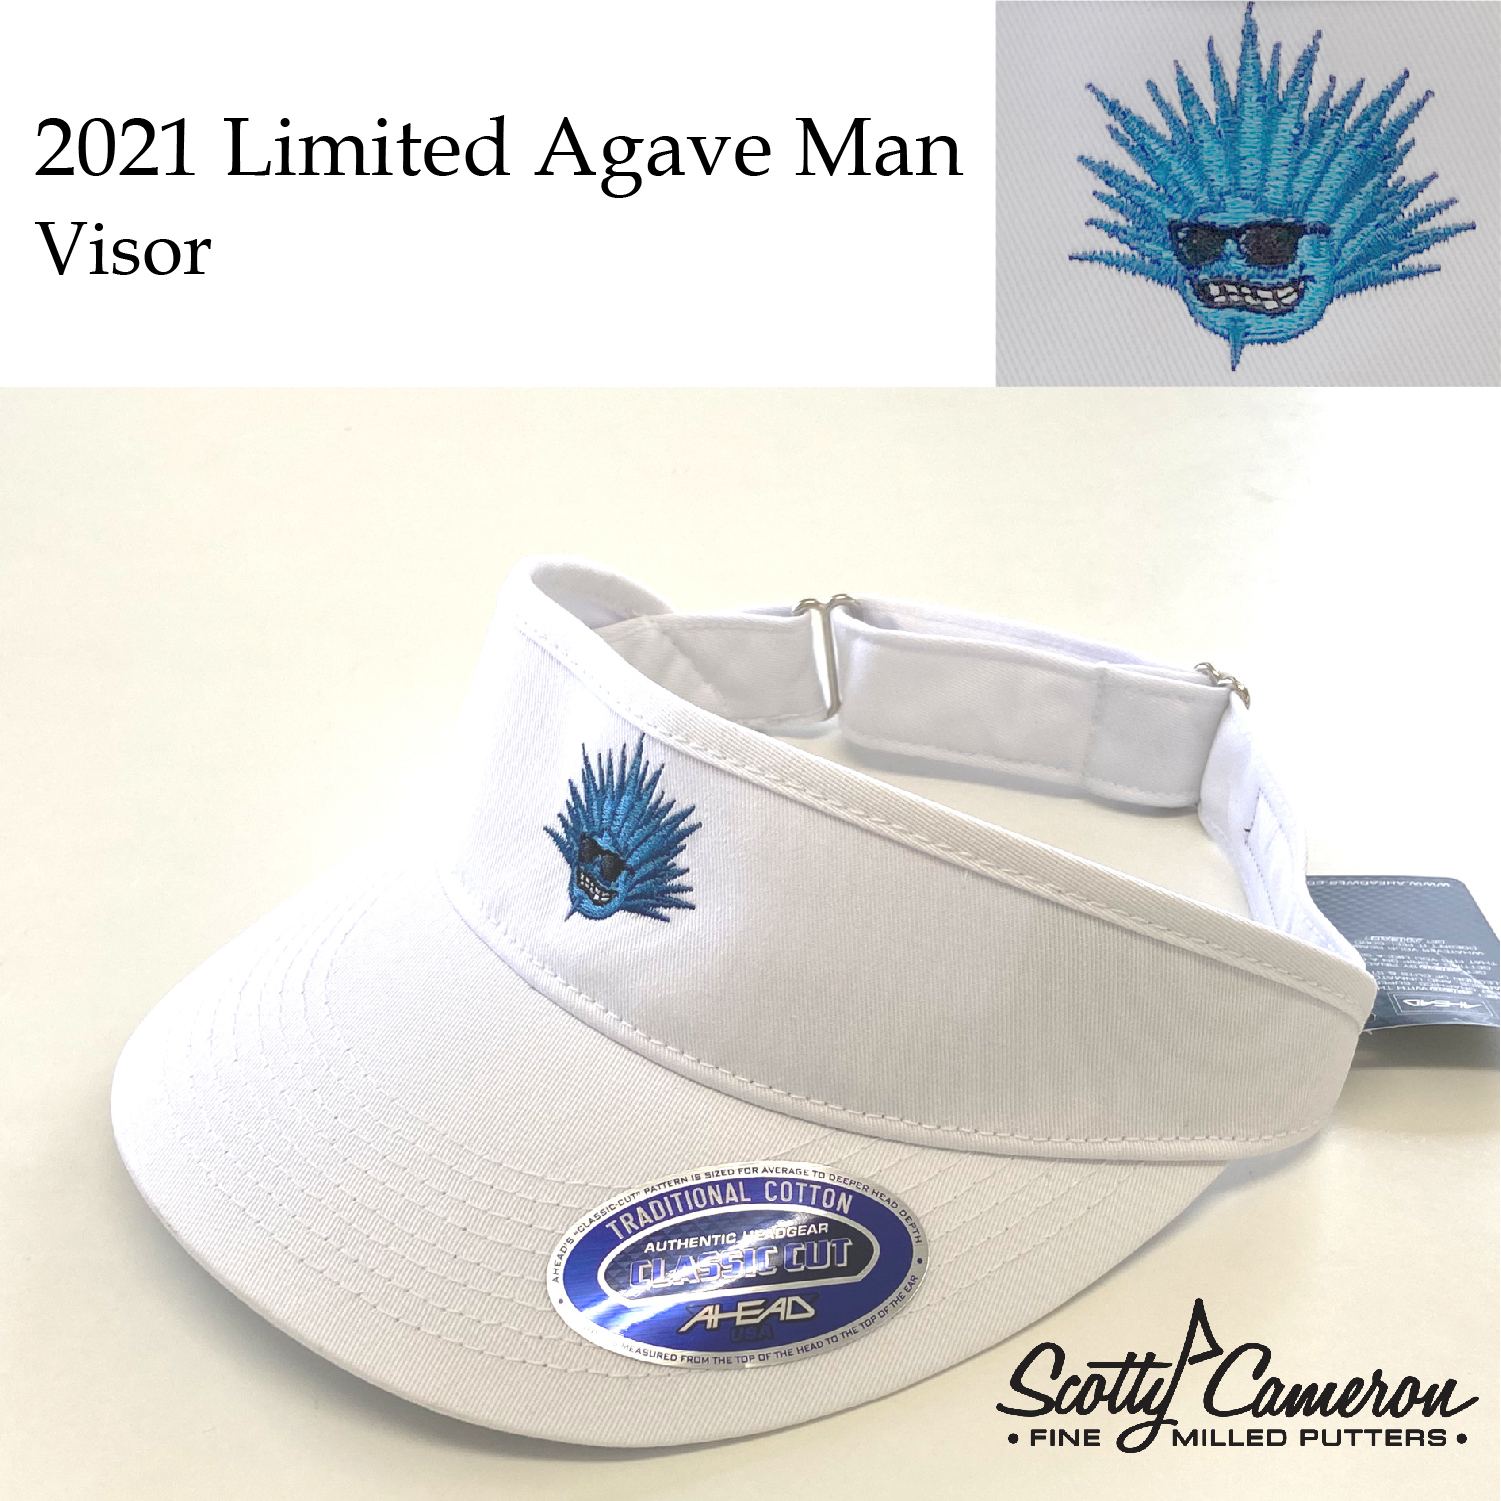 Scotty Cameron 2021 Limited Agave Man Visor White